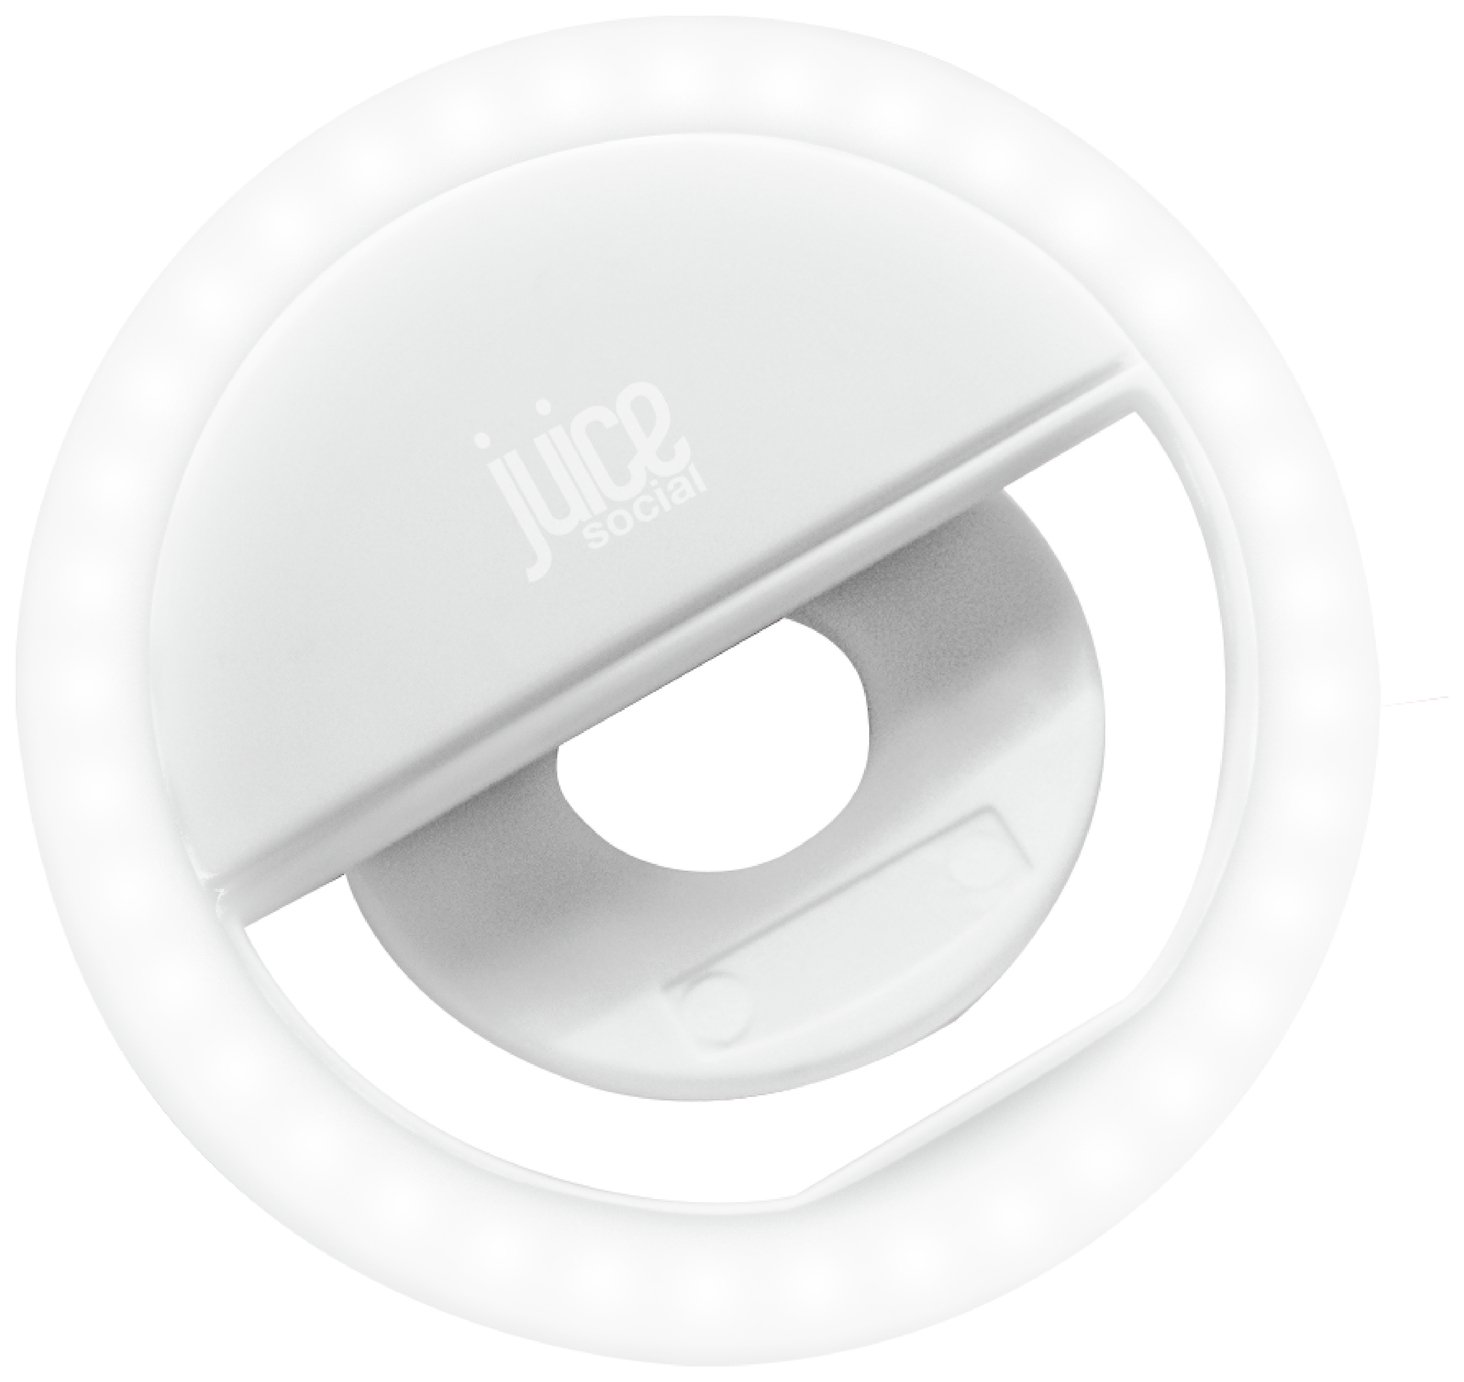 Juice Social 3-level Light Up Selfie Ring Light